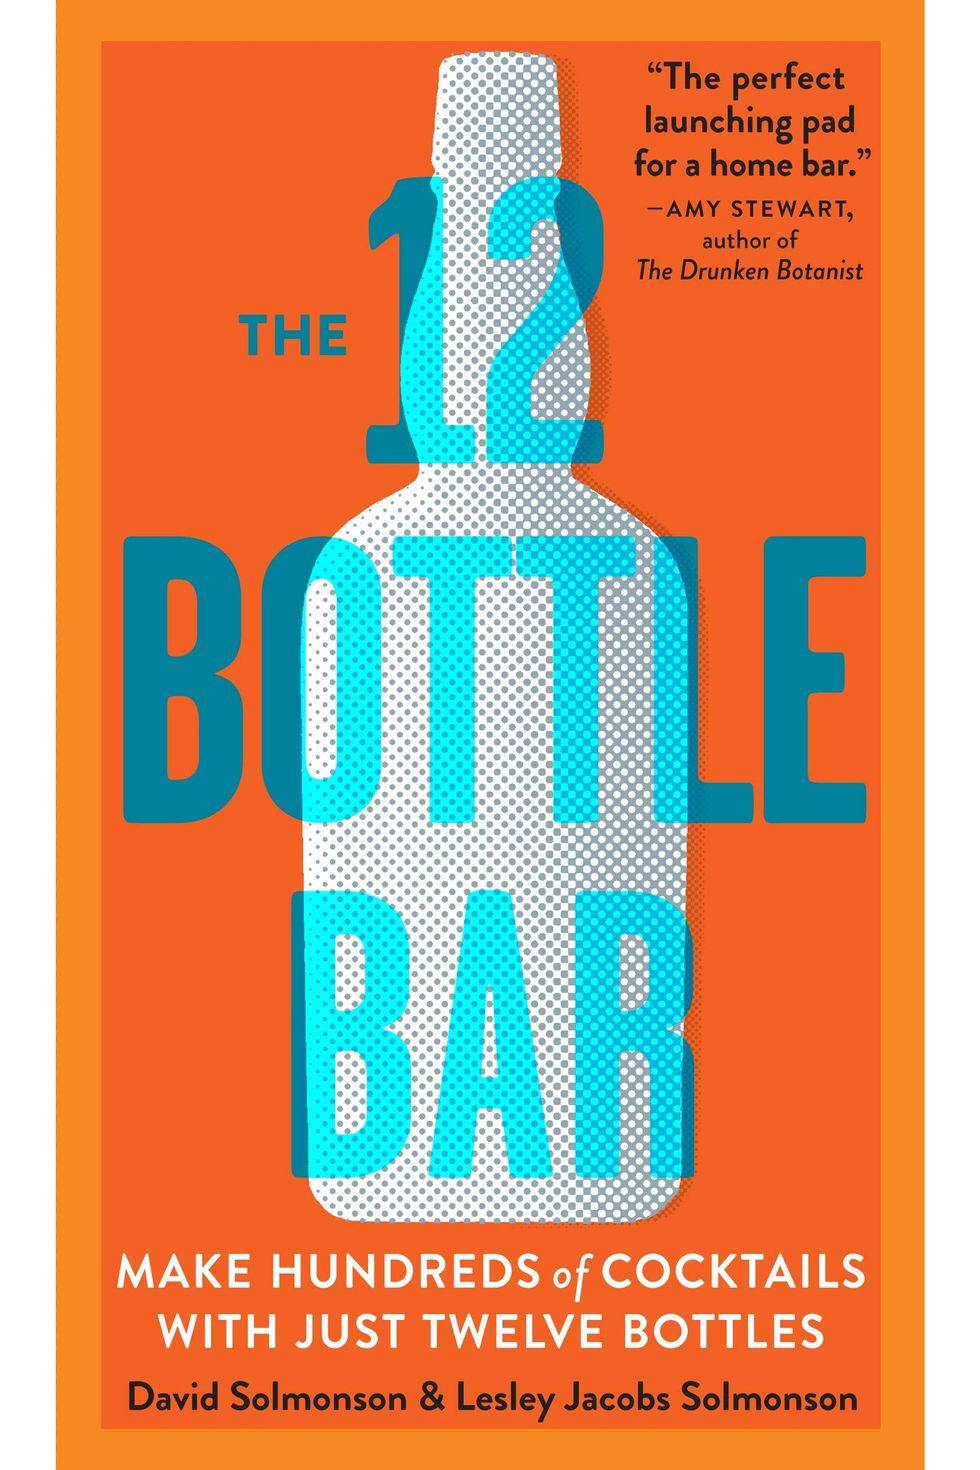 The 12 Bottle Bar by David Solmonson & Lesley Jacobs Solmonson